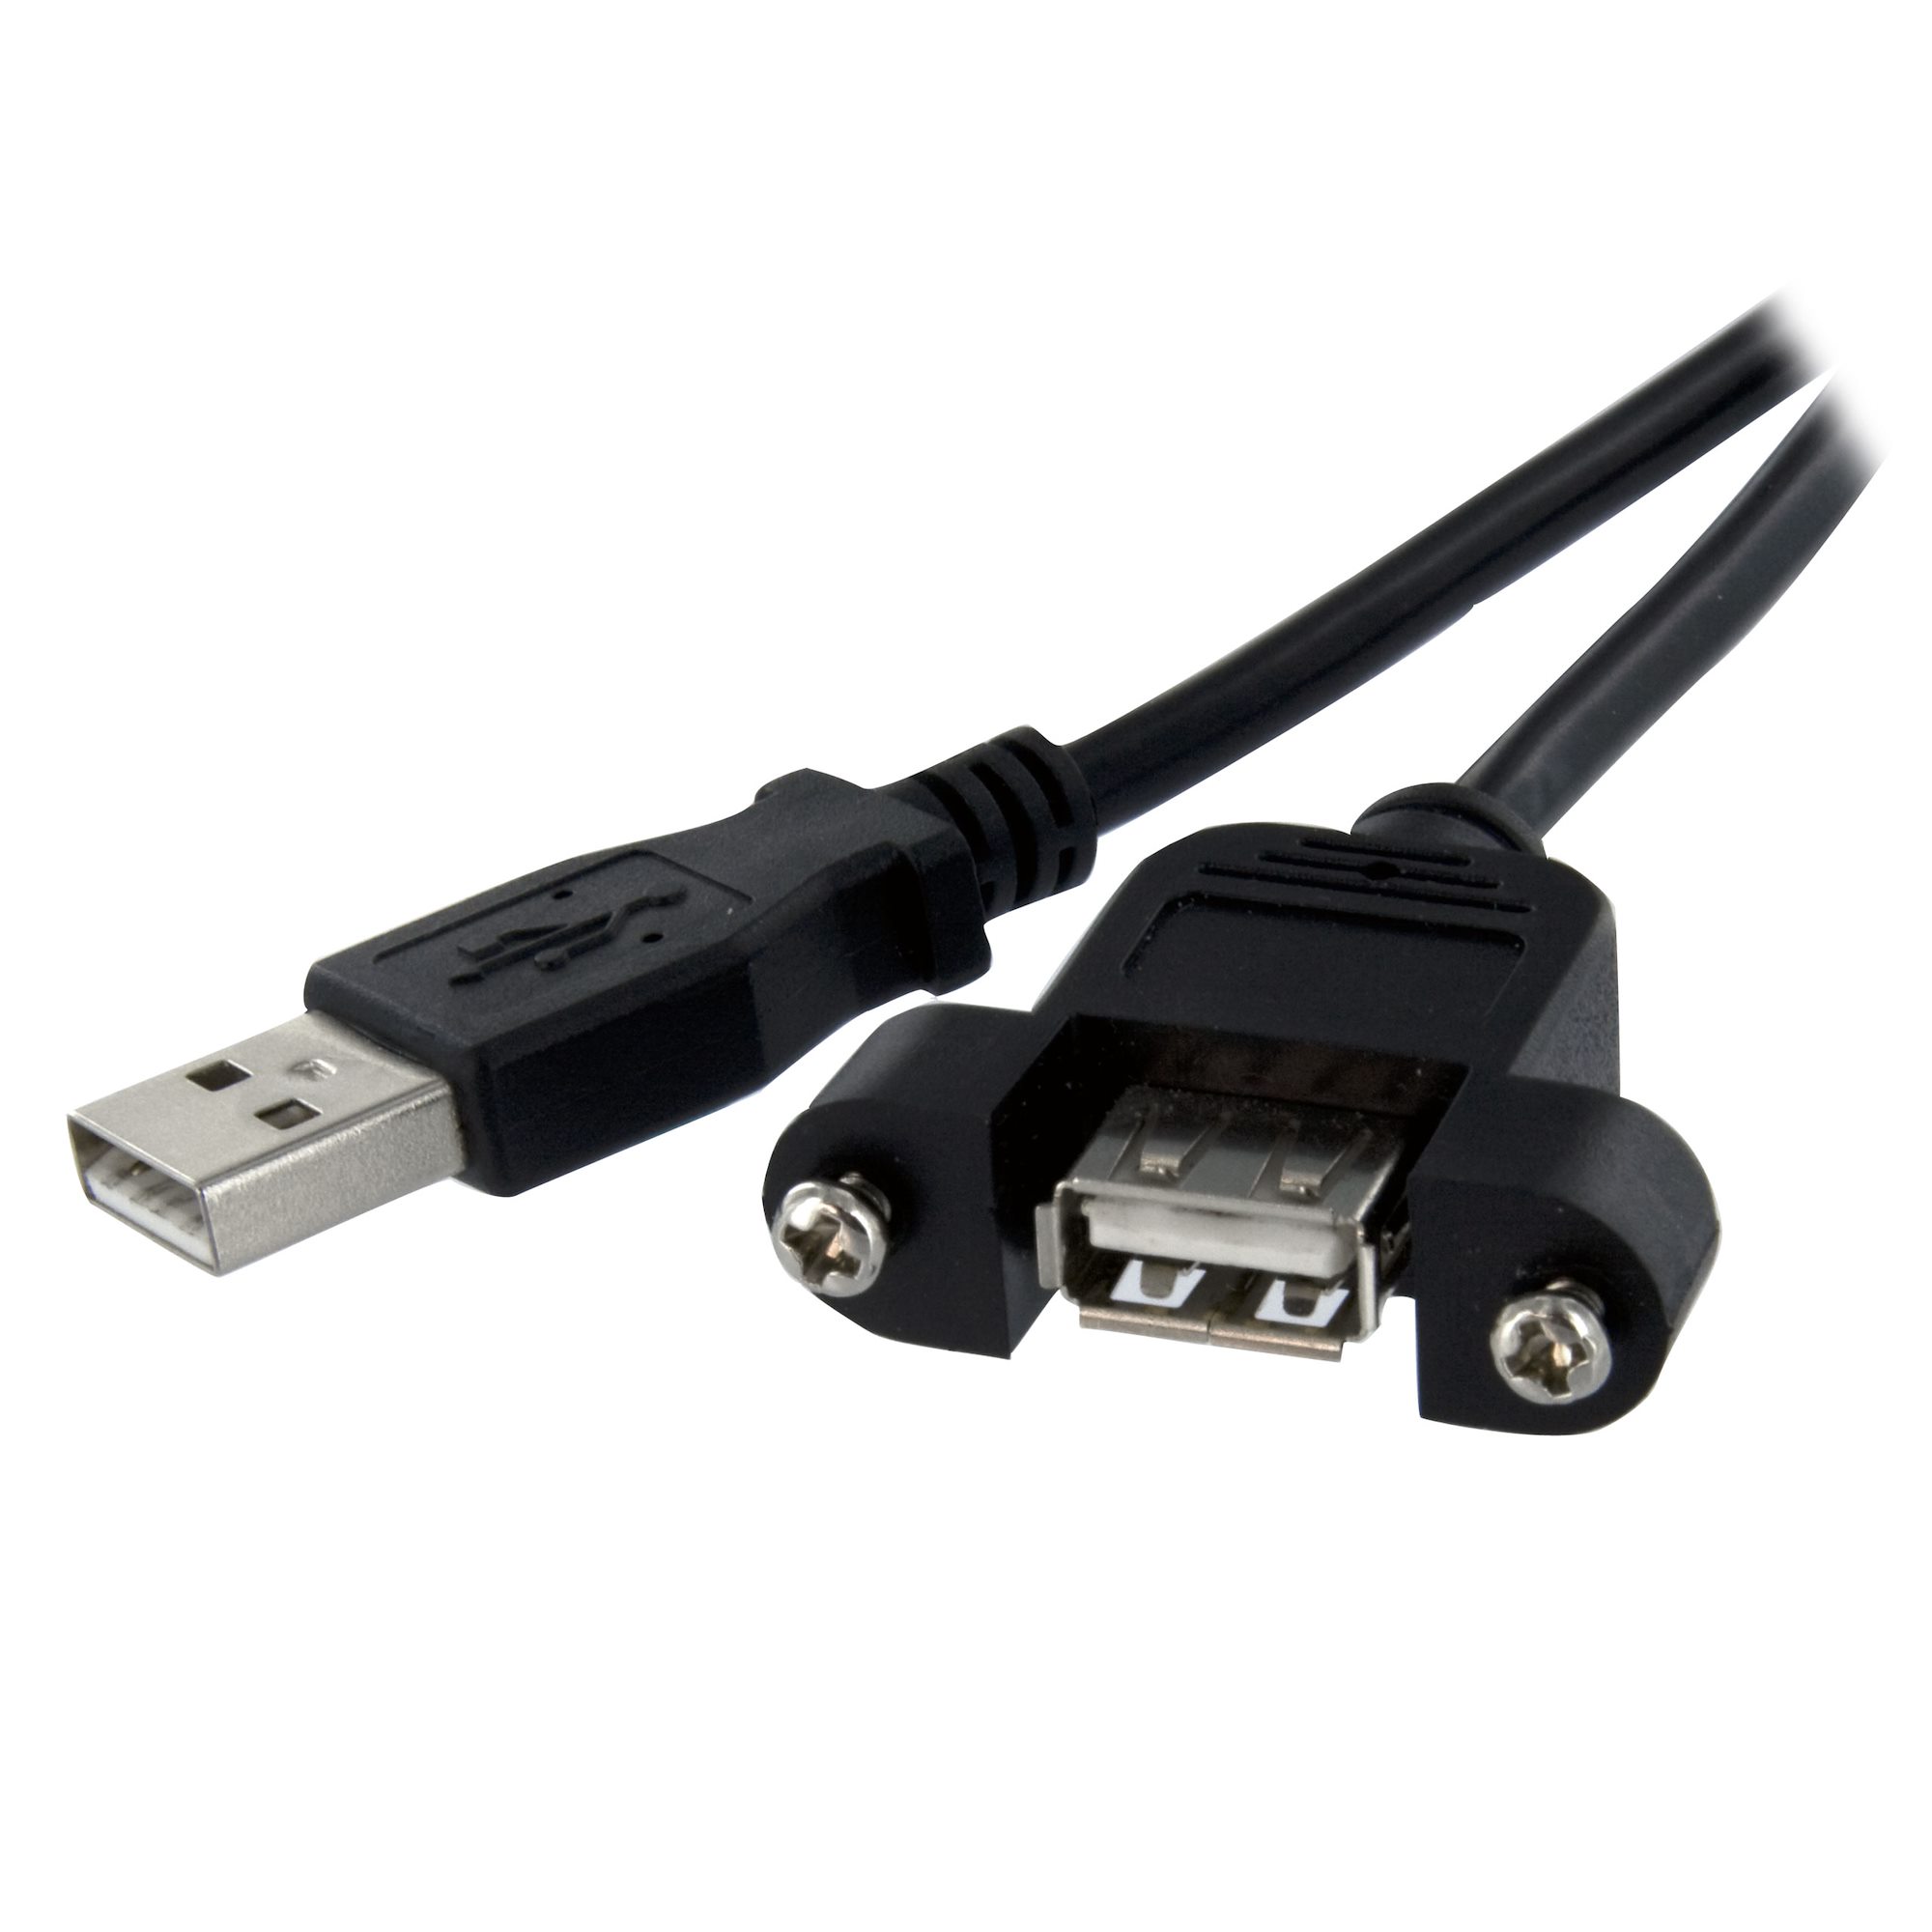 Cable 30cm USB de Panel Alargador USB A - Cables USB Internos y Cables USB  de Montaje en Panel